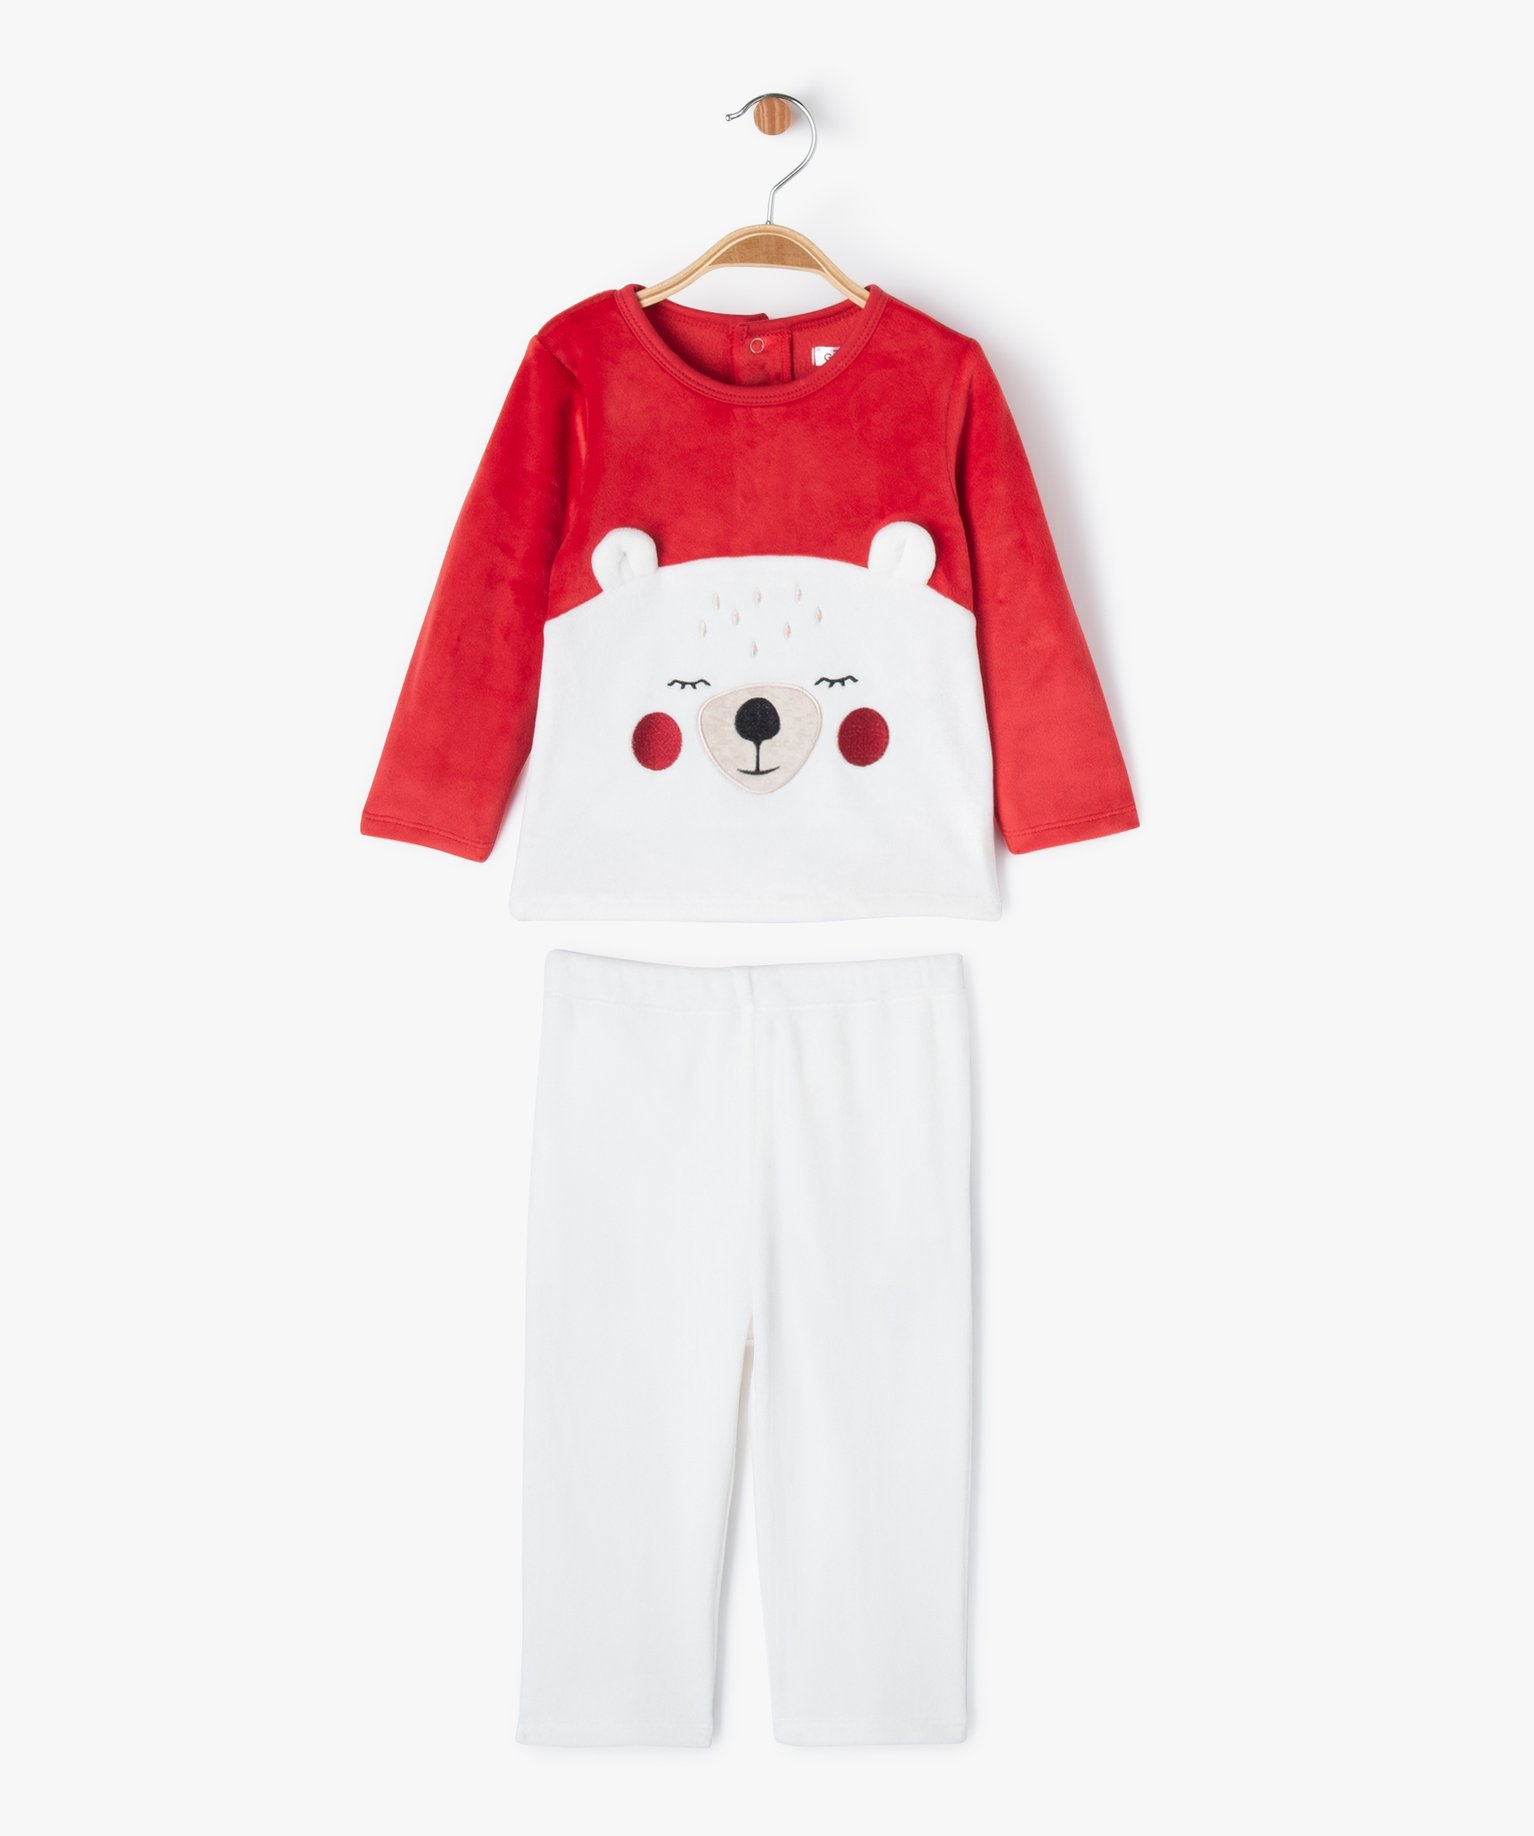 Pyjama 2 pièces velours motif ours bébé garçon - GEMO